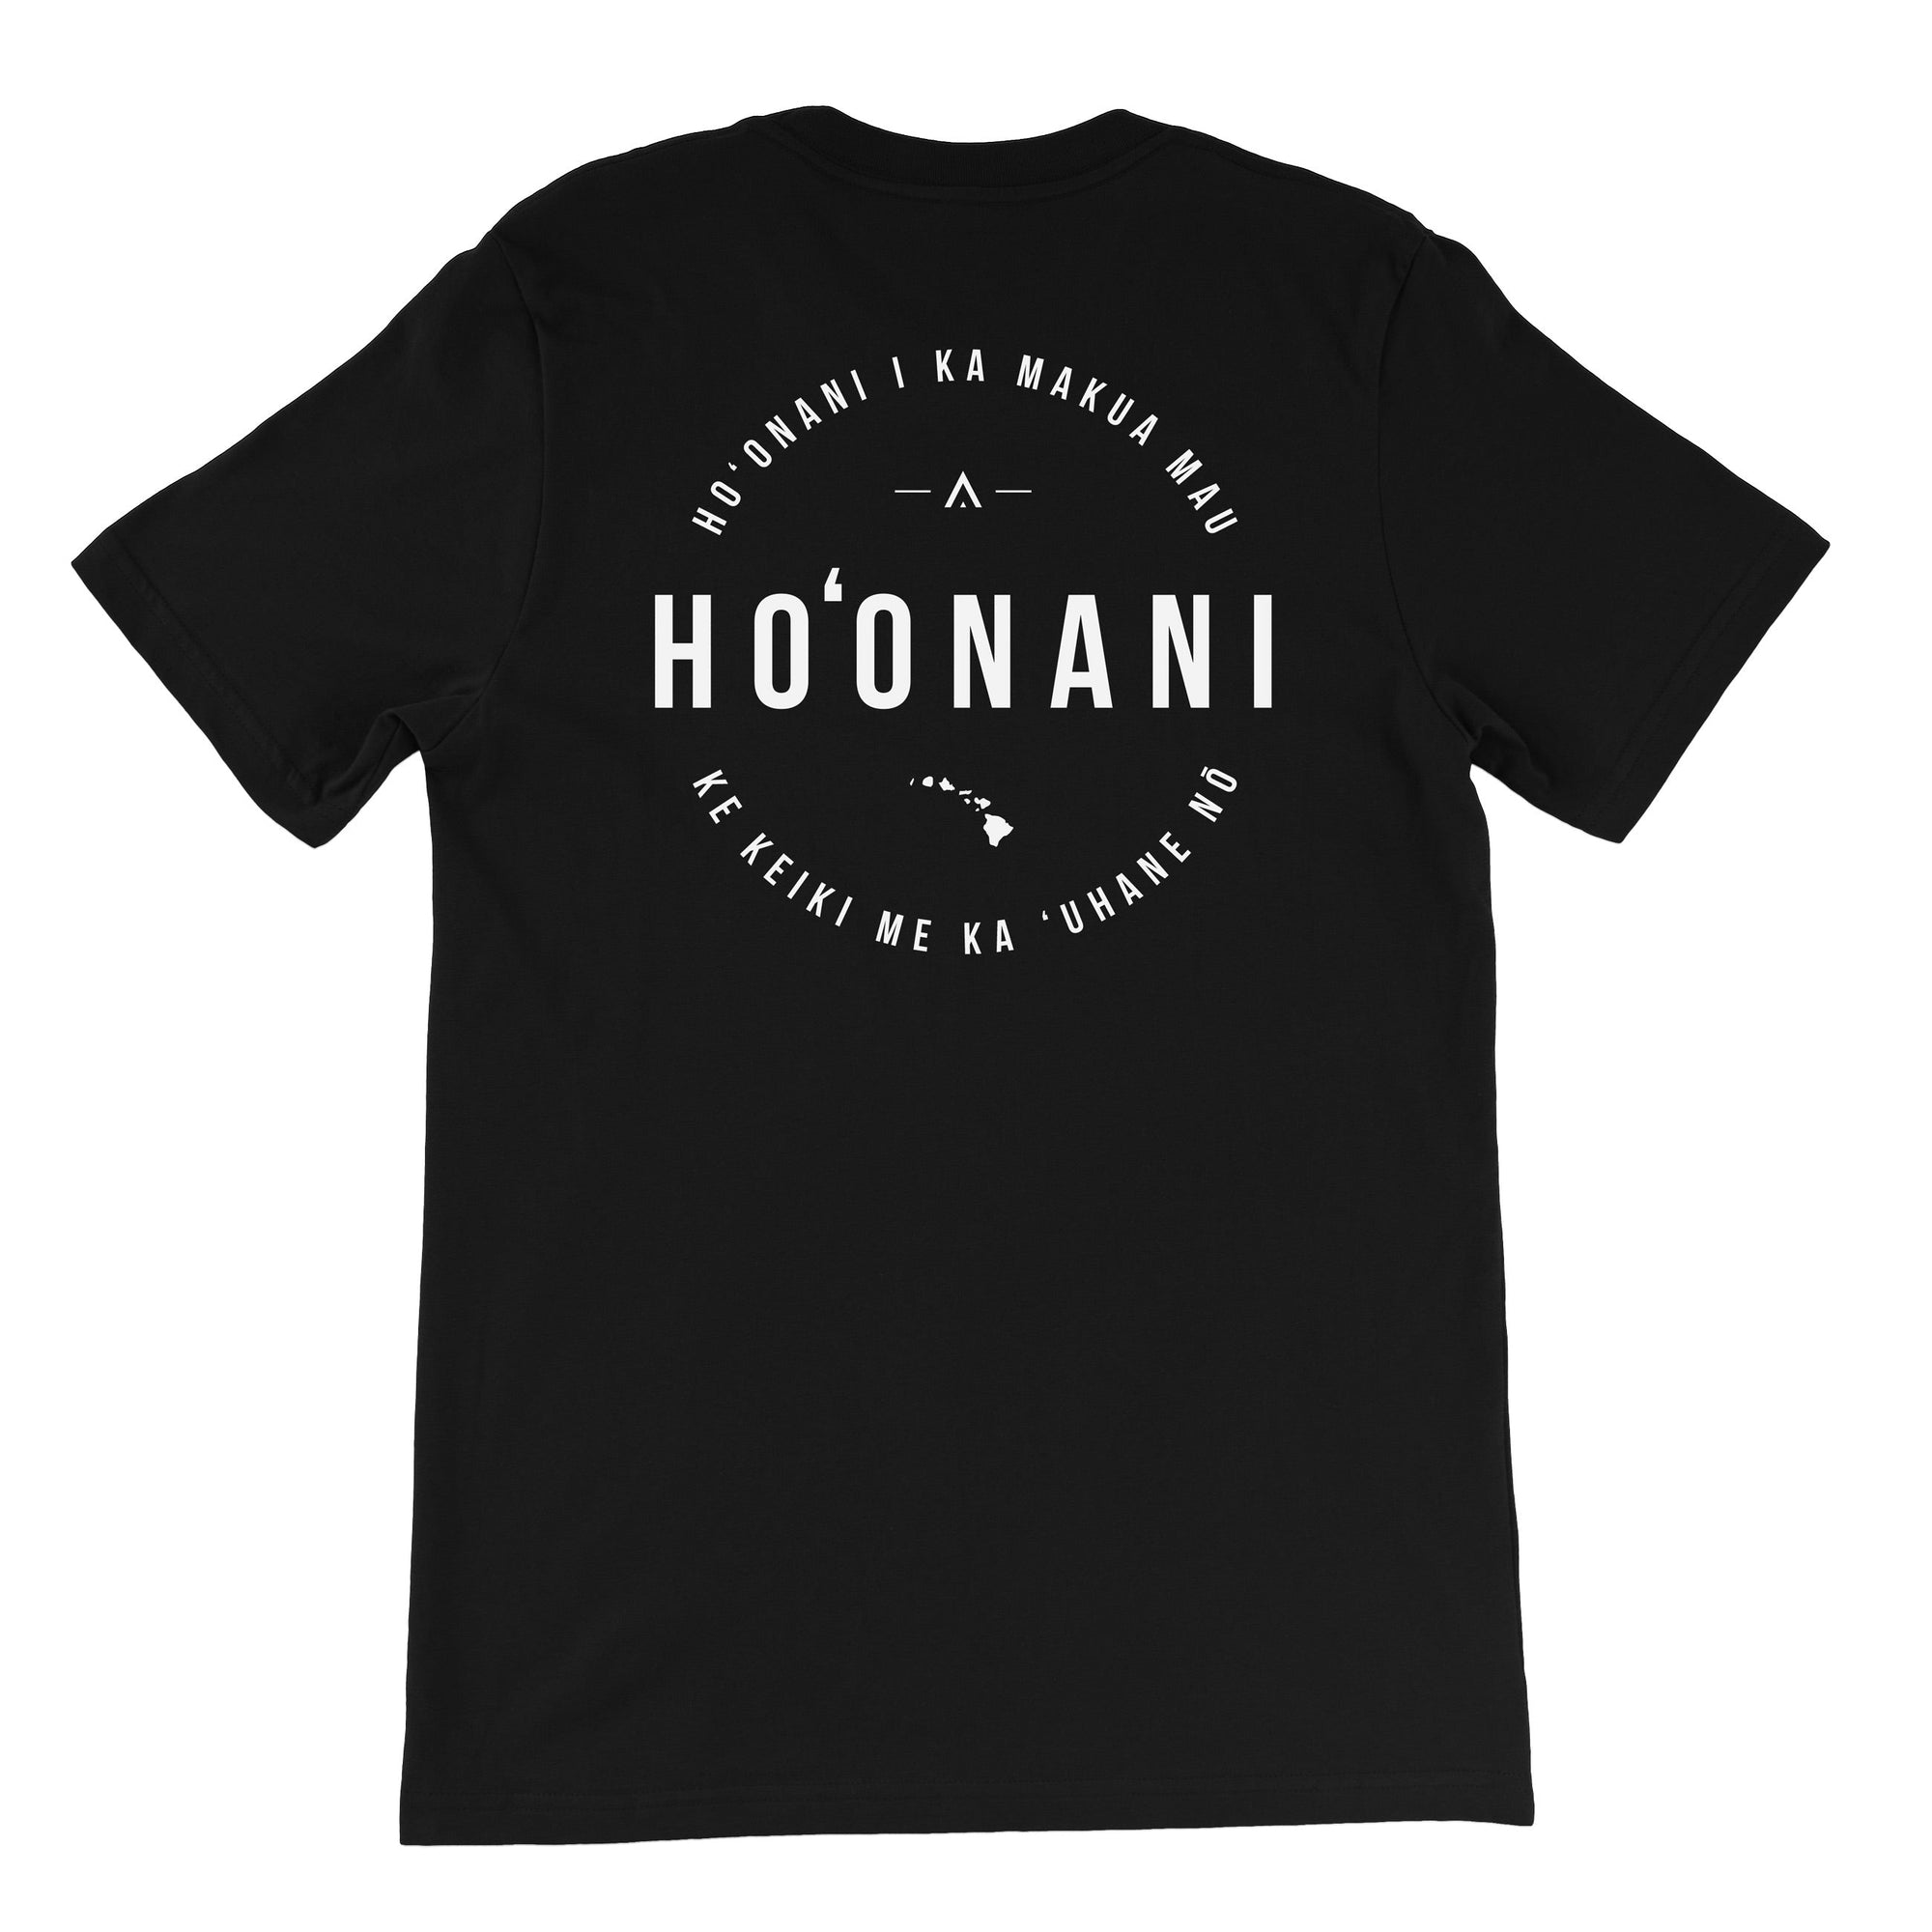 Pop-Up Mākeke - Aloha Ke Akua Clothing - Ho‘onani Men's Short Sleeve T-Shirt - Black - Back View